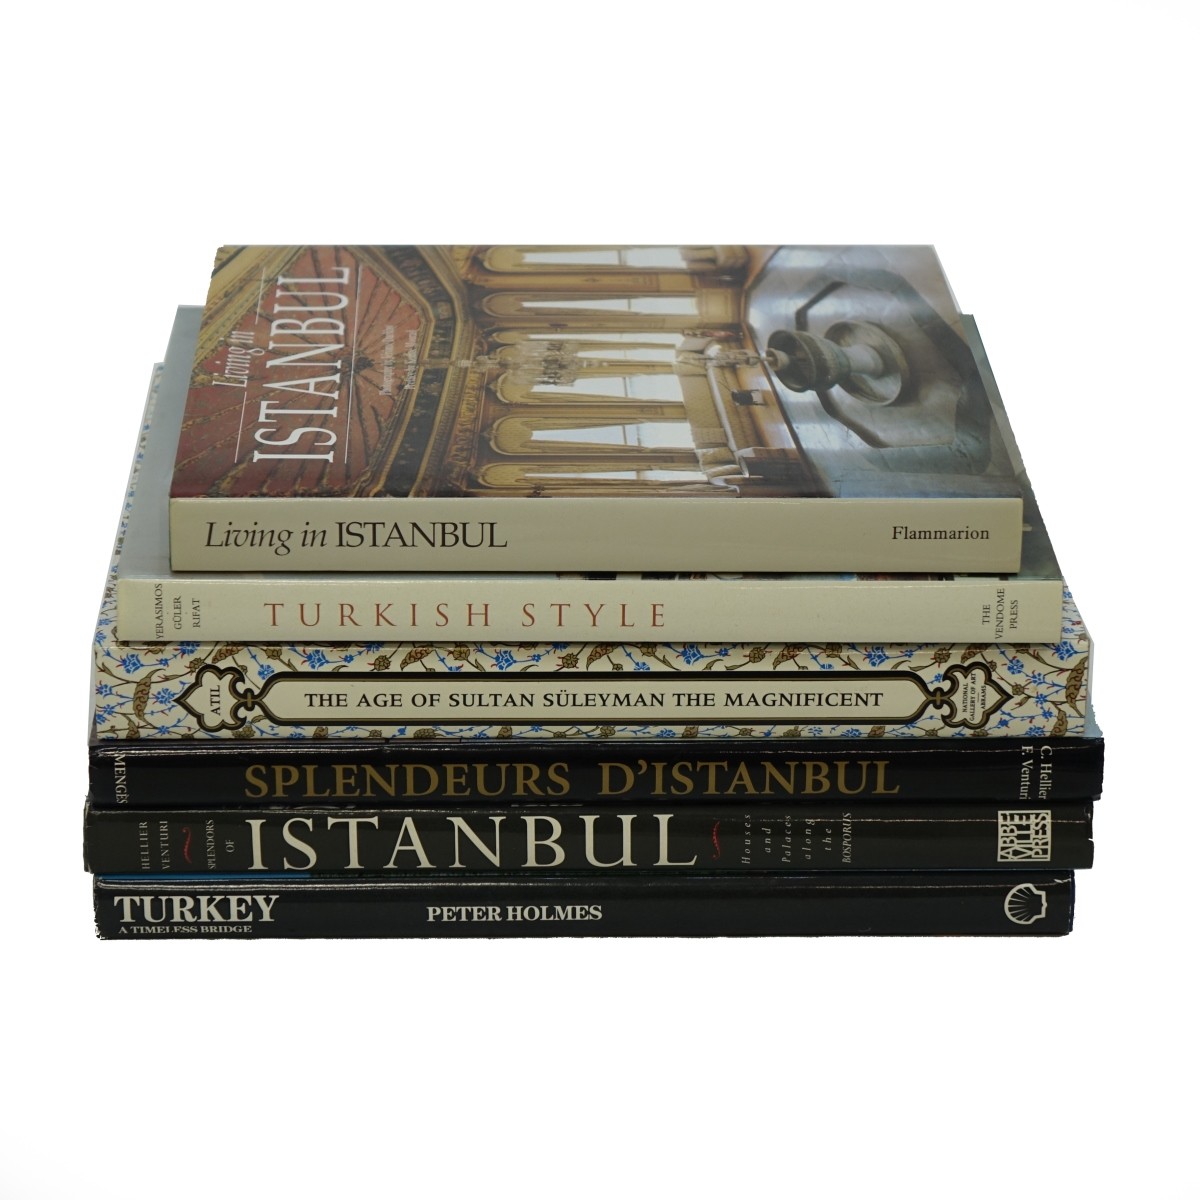 Six Volumes on Turkish Art and Design